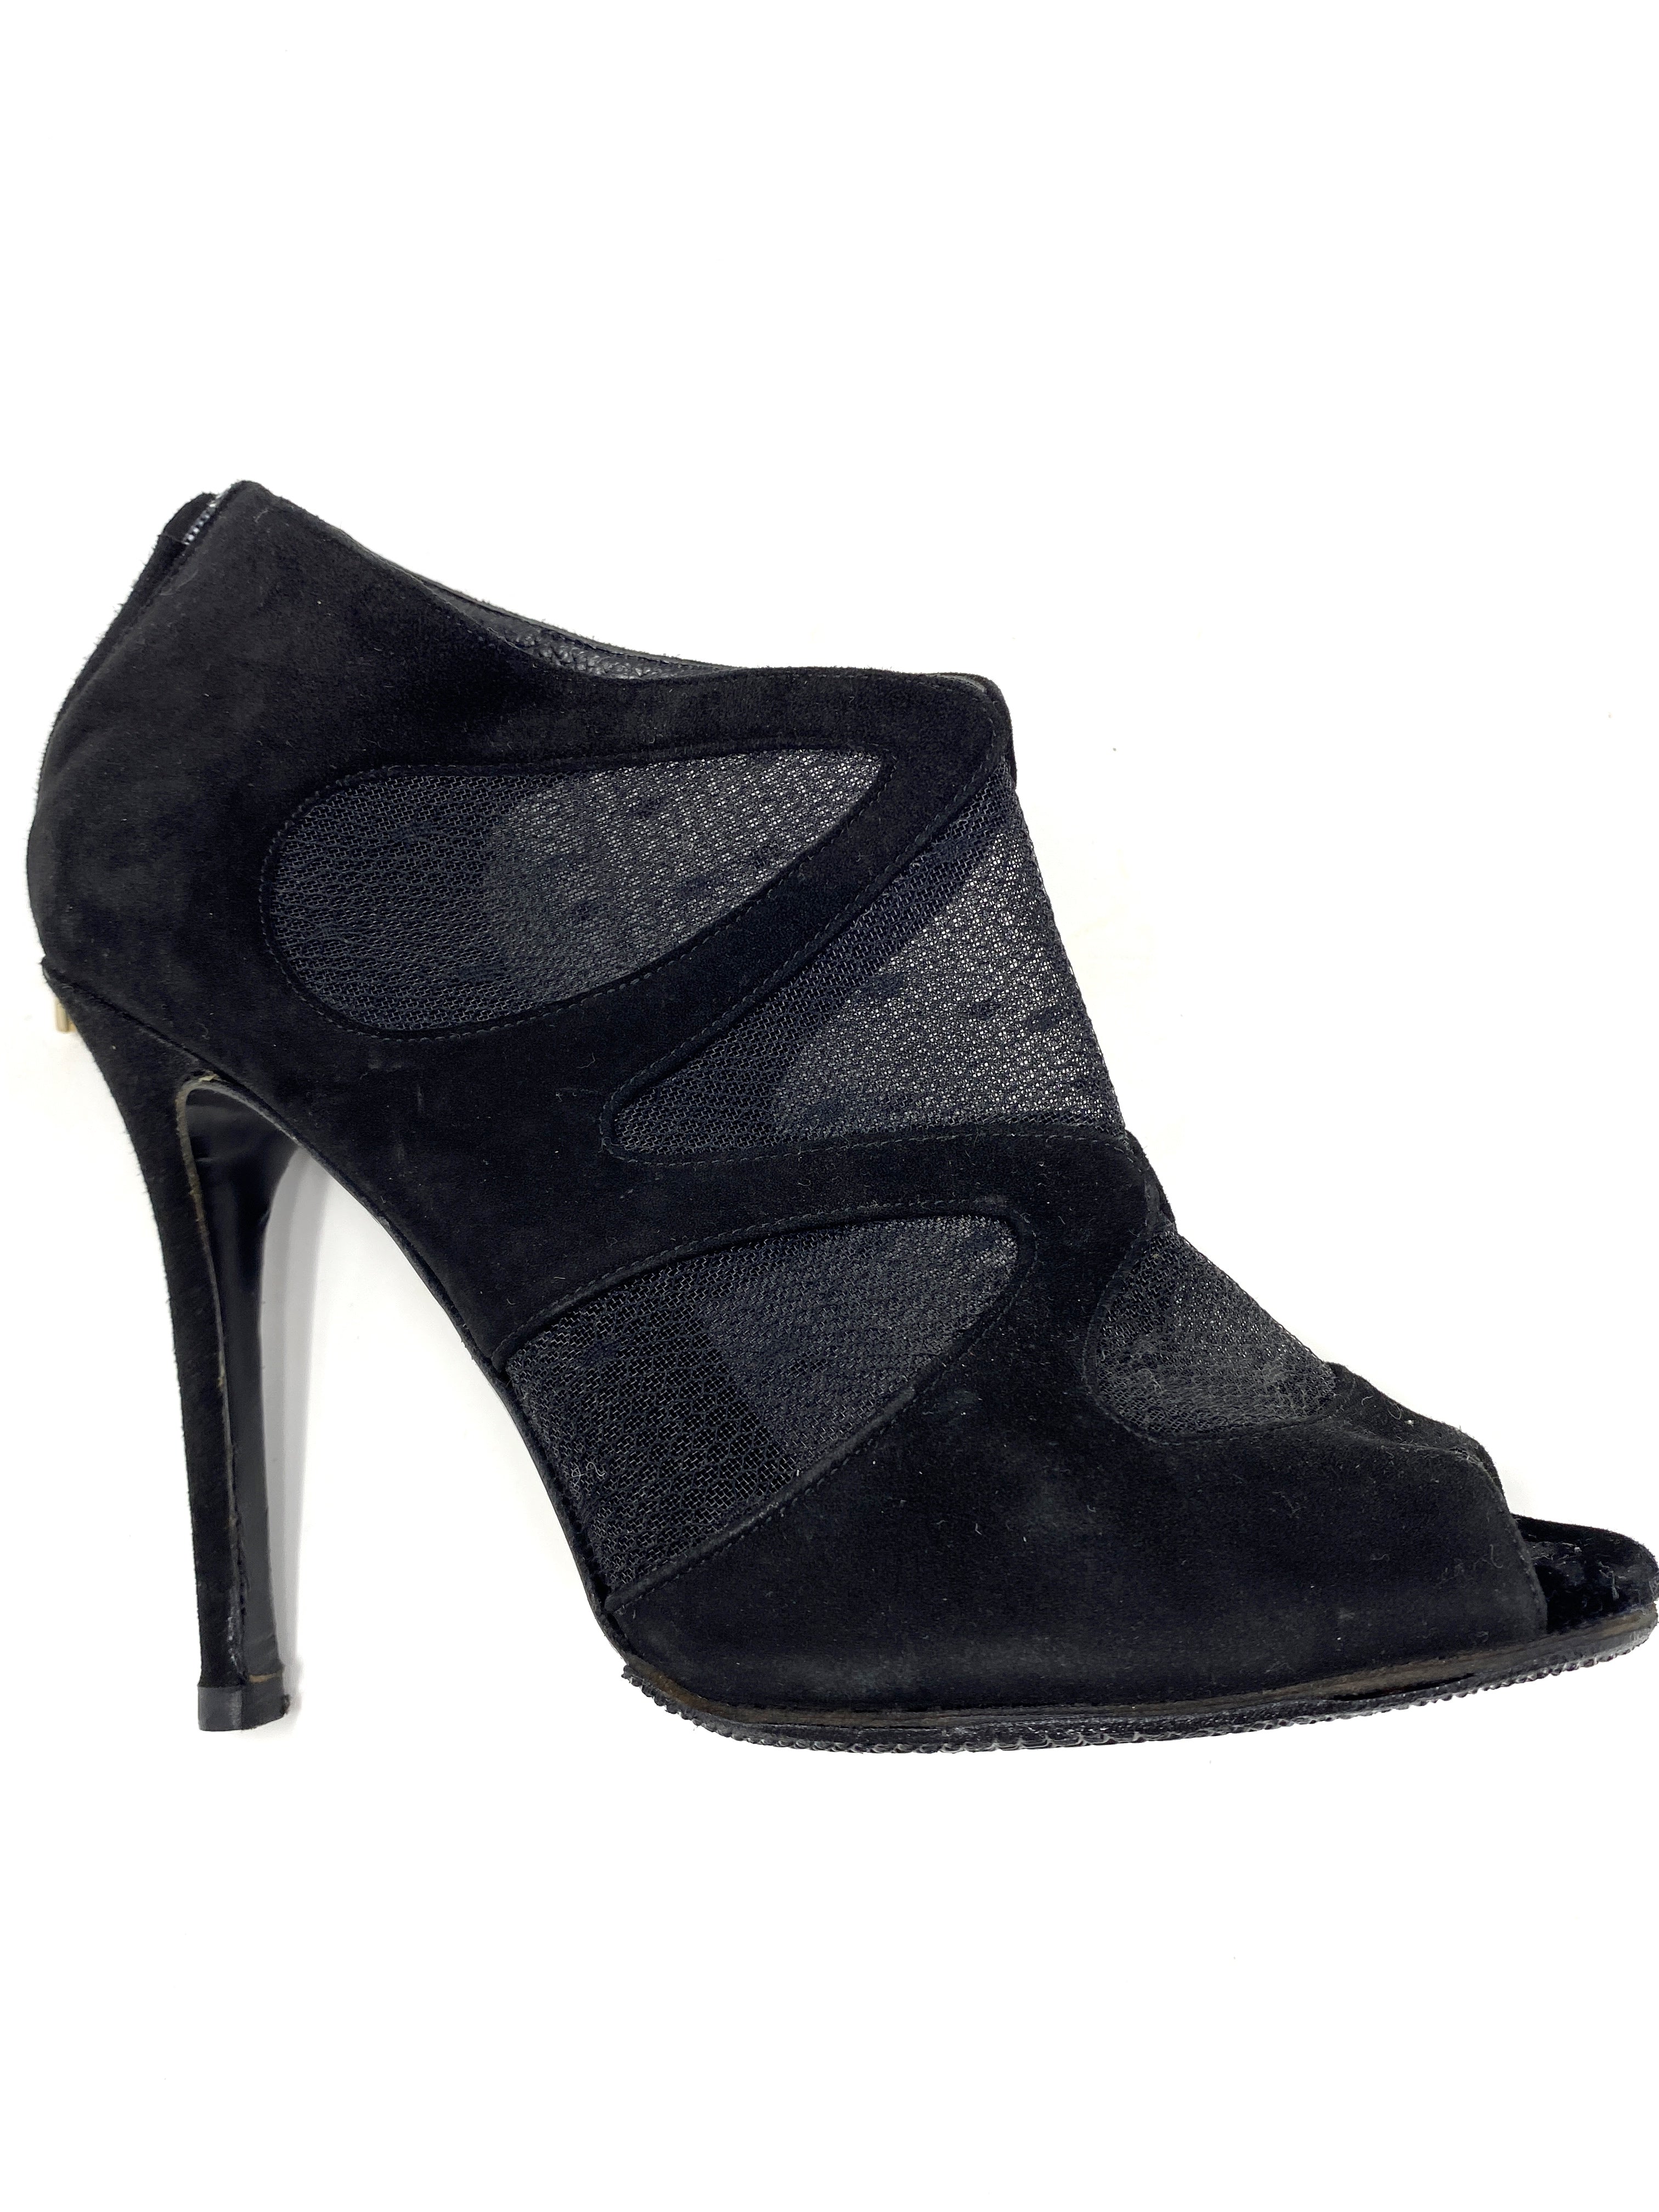 Dolce & Gabbana shoes; high heels; black; open toe